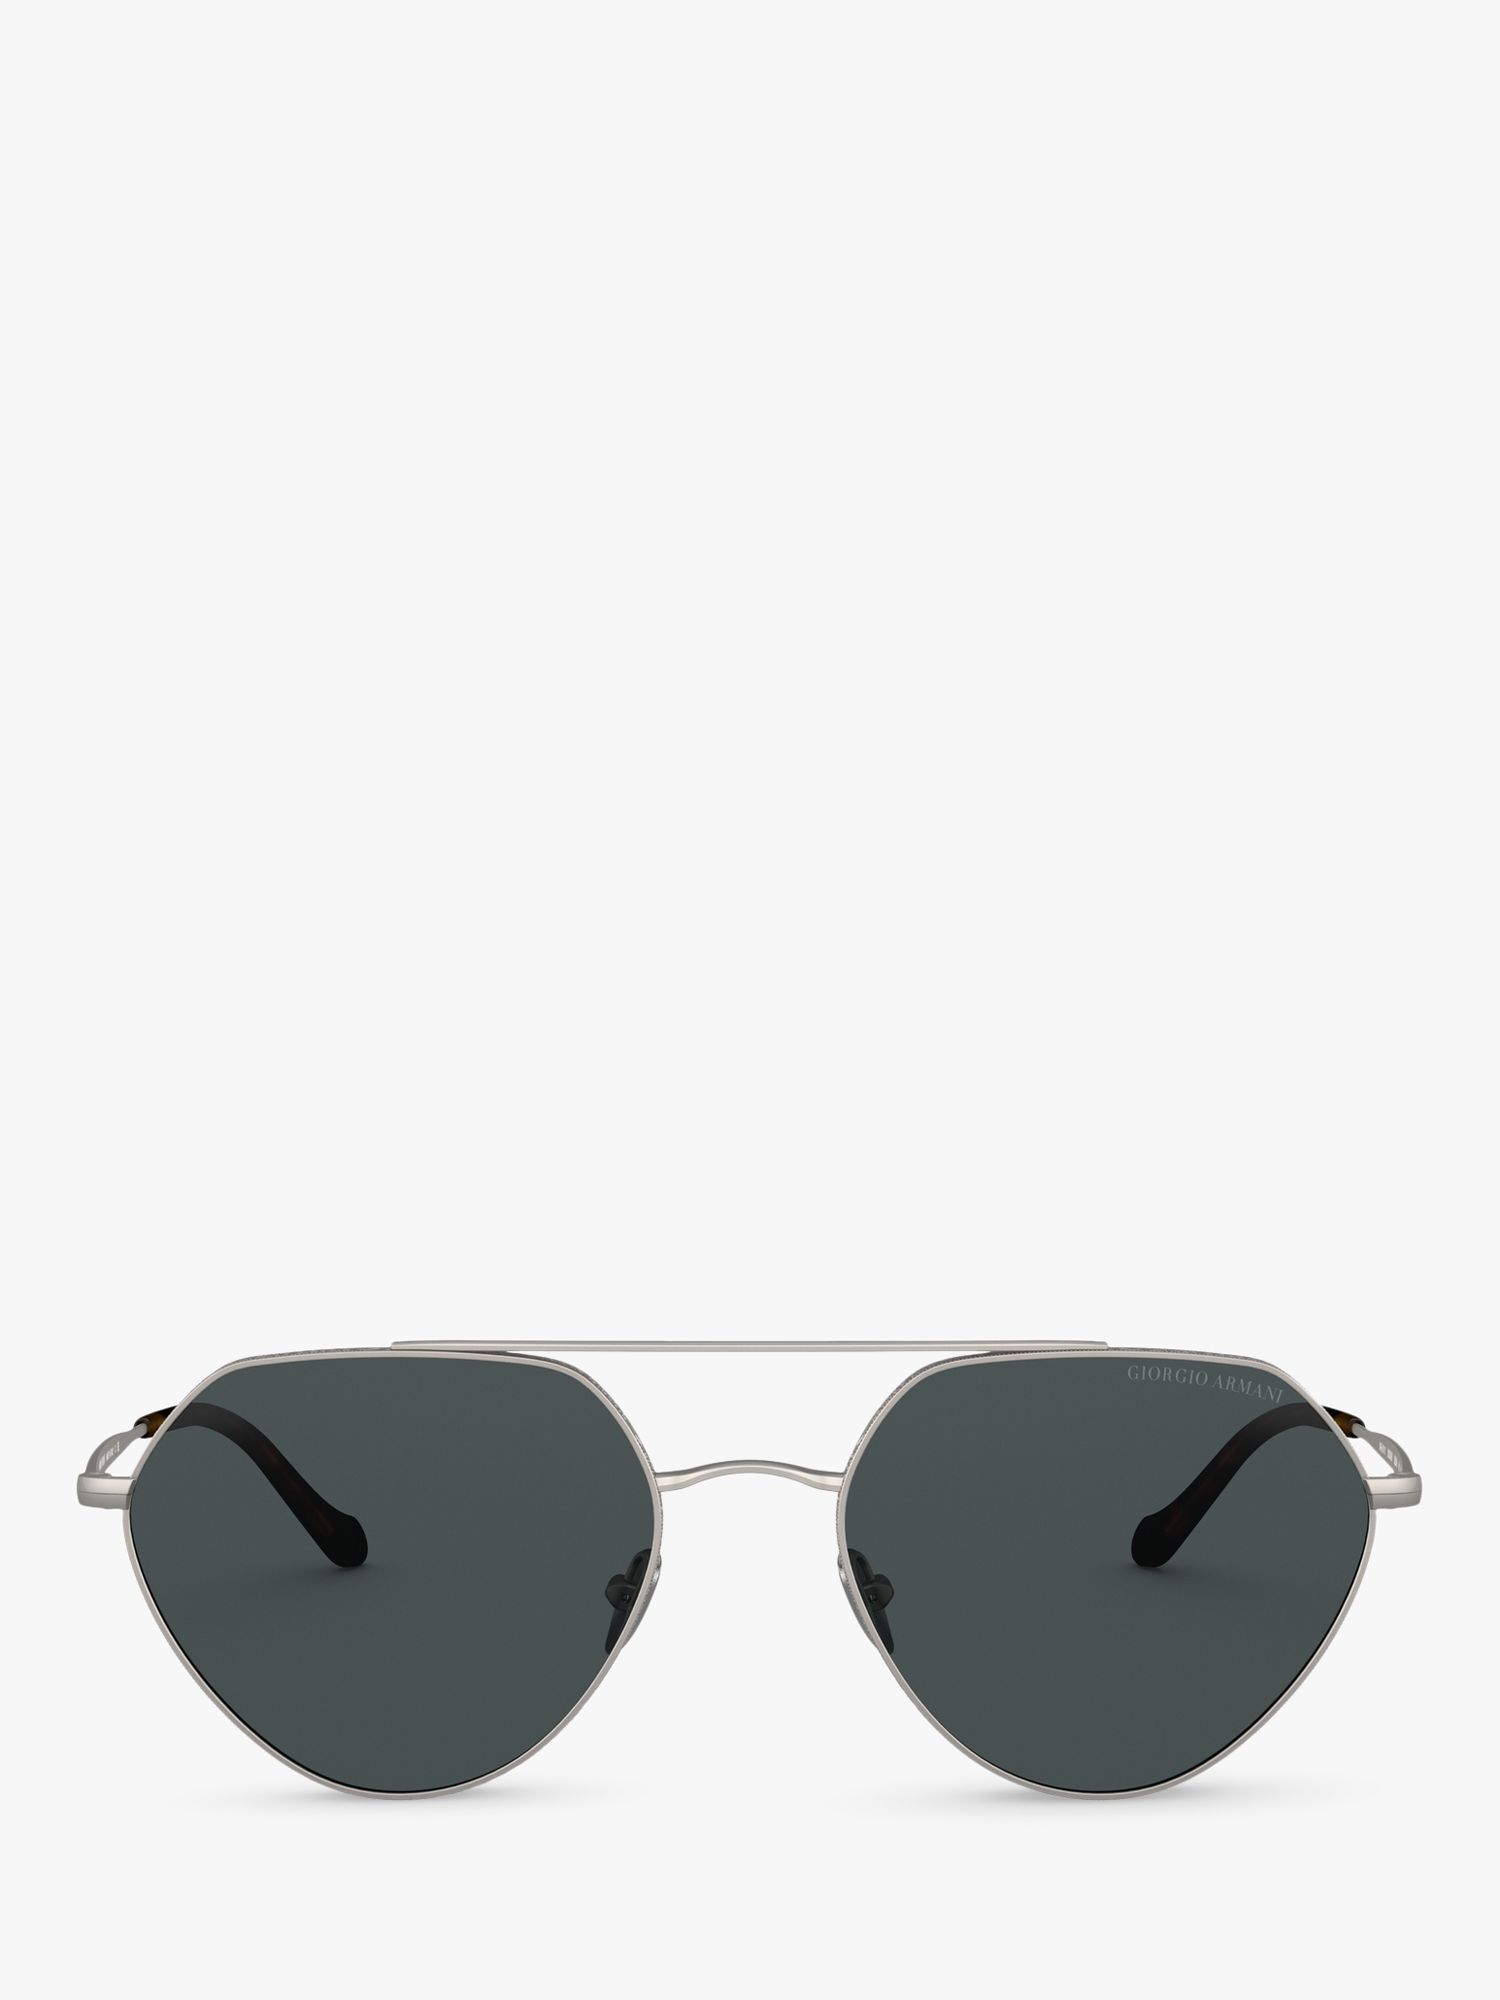 Giorgio Armani AR6111 Women's Irregular Sunglasses, Matte Gunmetal/Grey